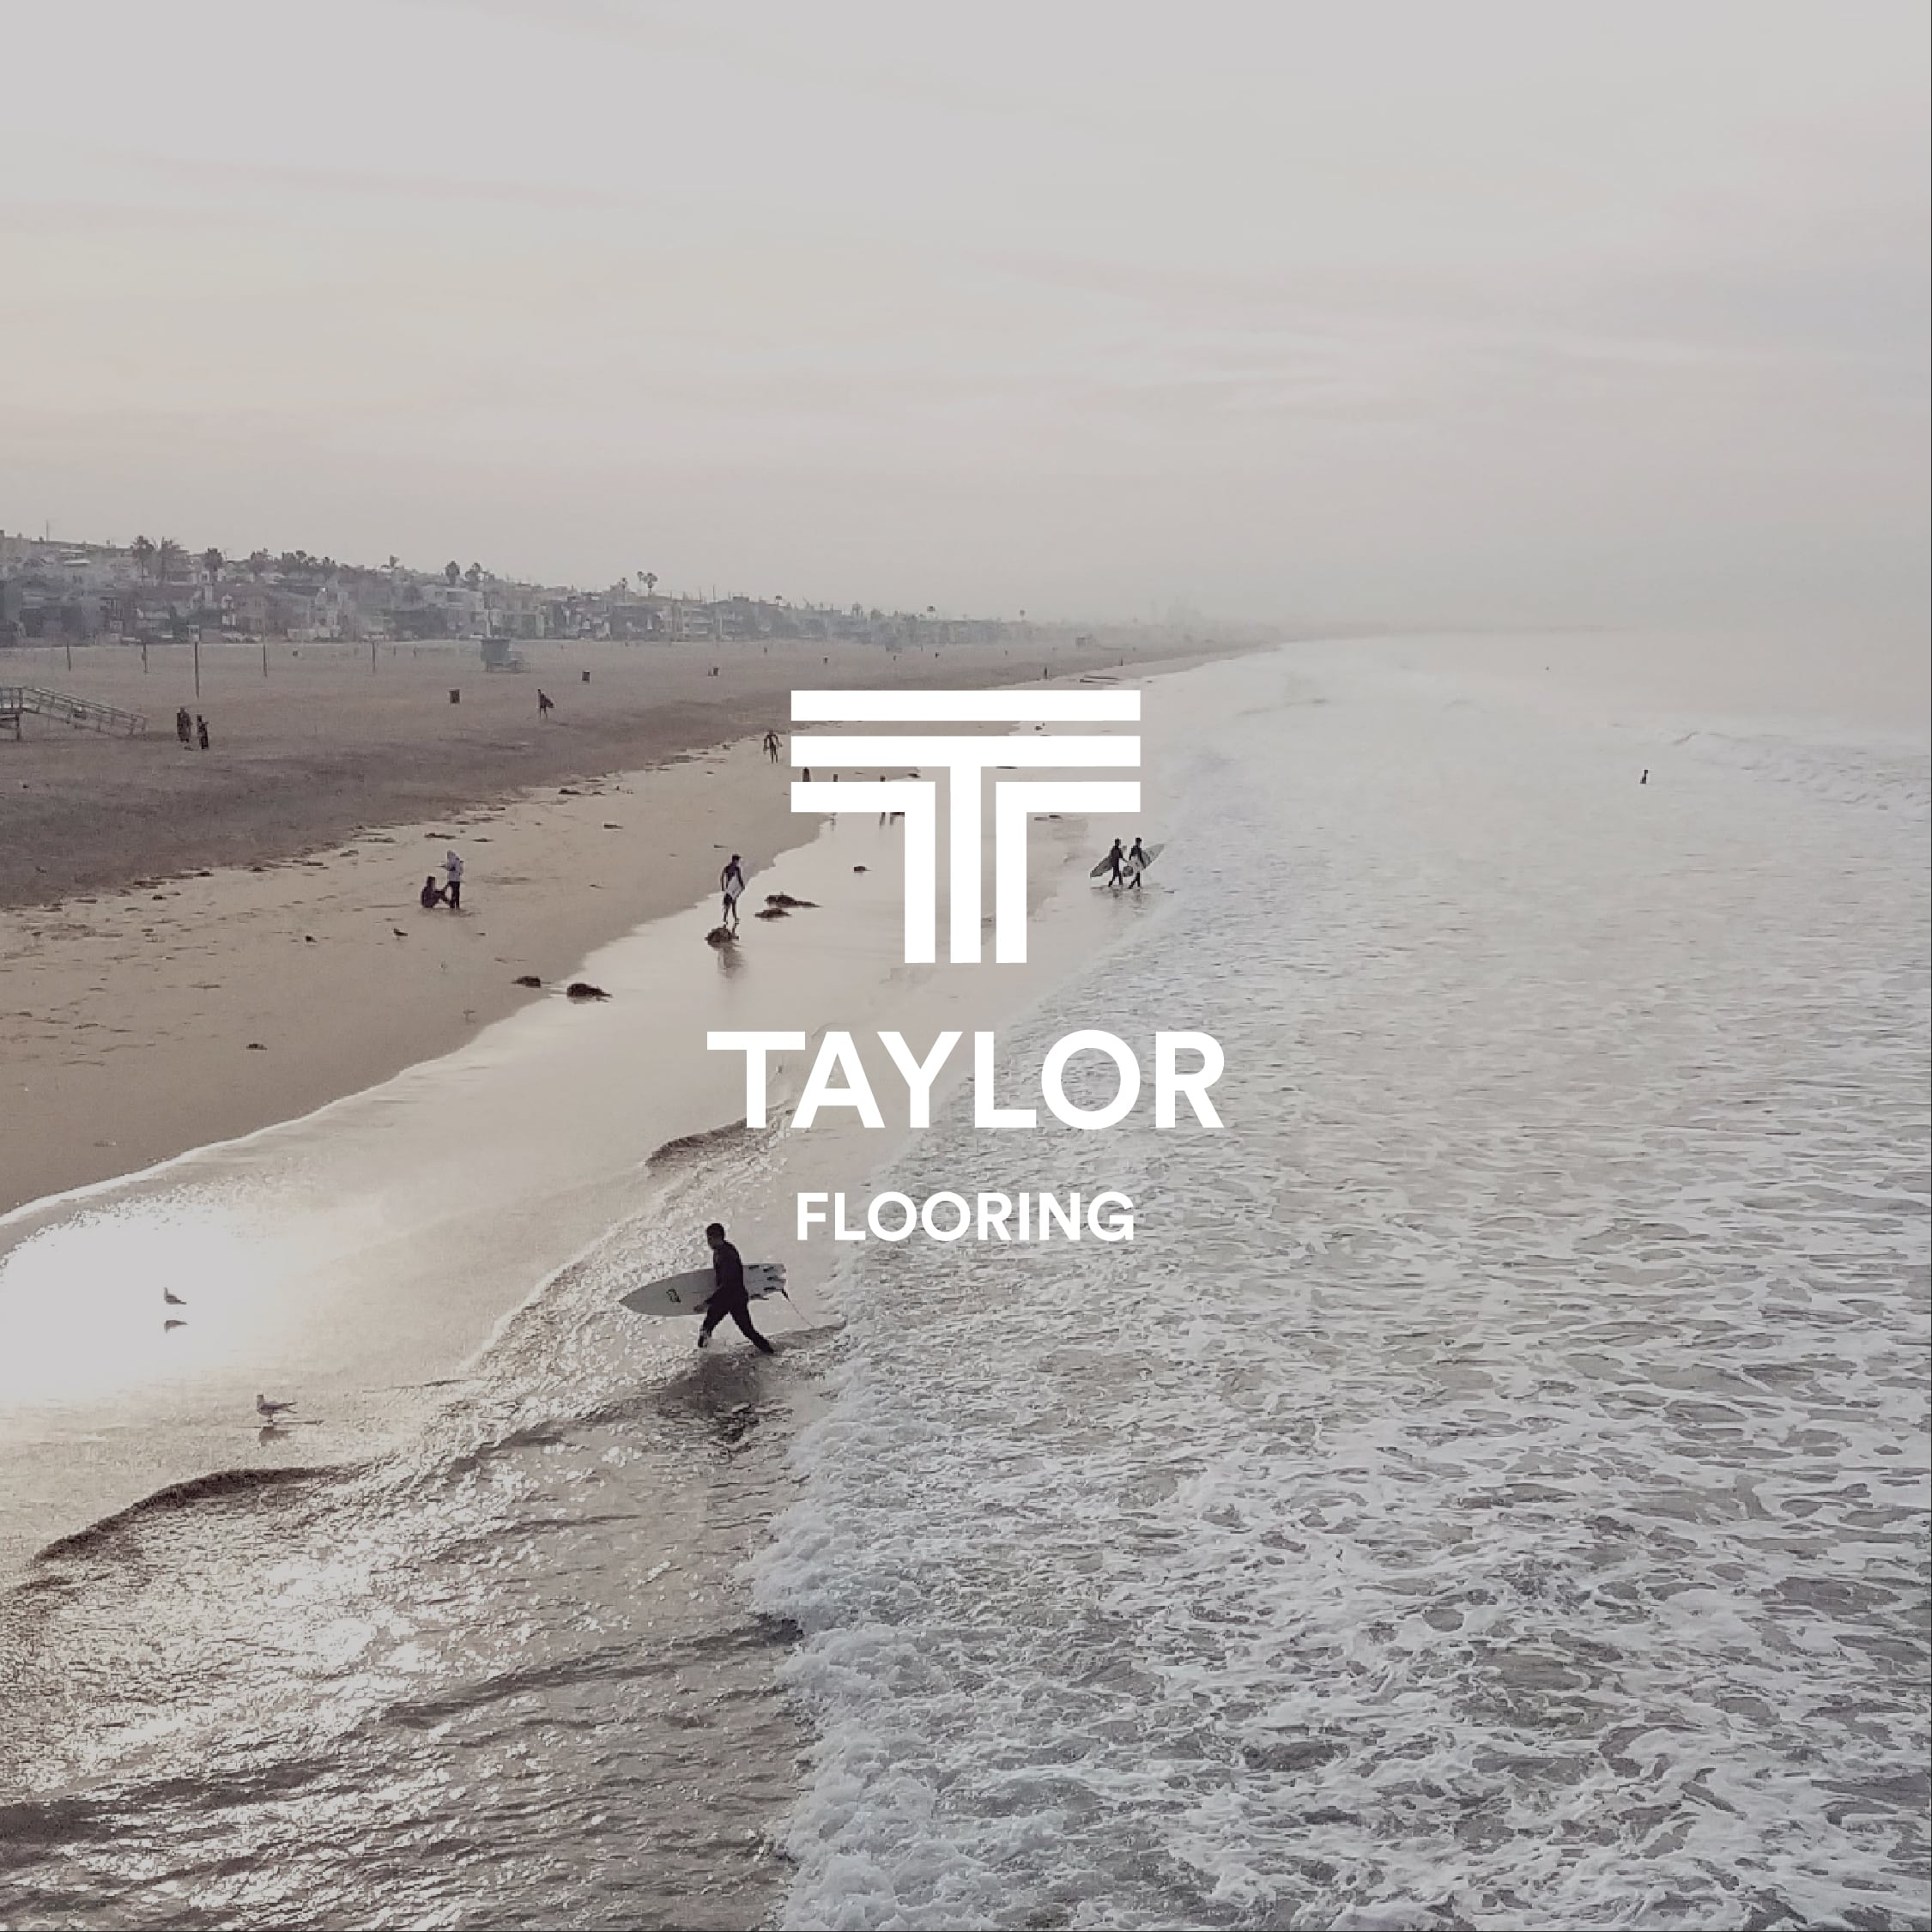 Taylor Flooring Logo Design By Stellen Design Branding Agency in Los Angeles California